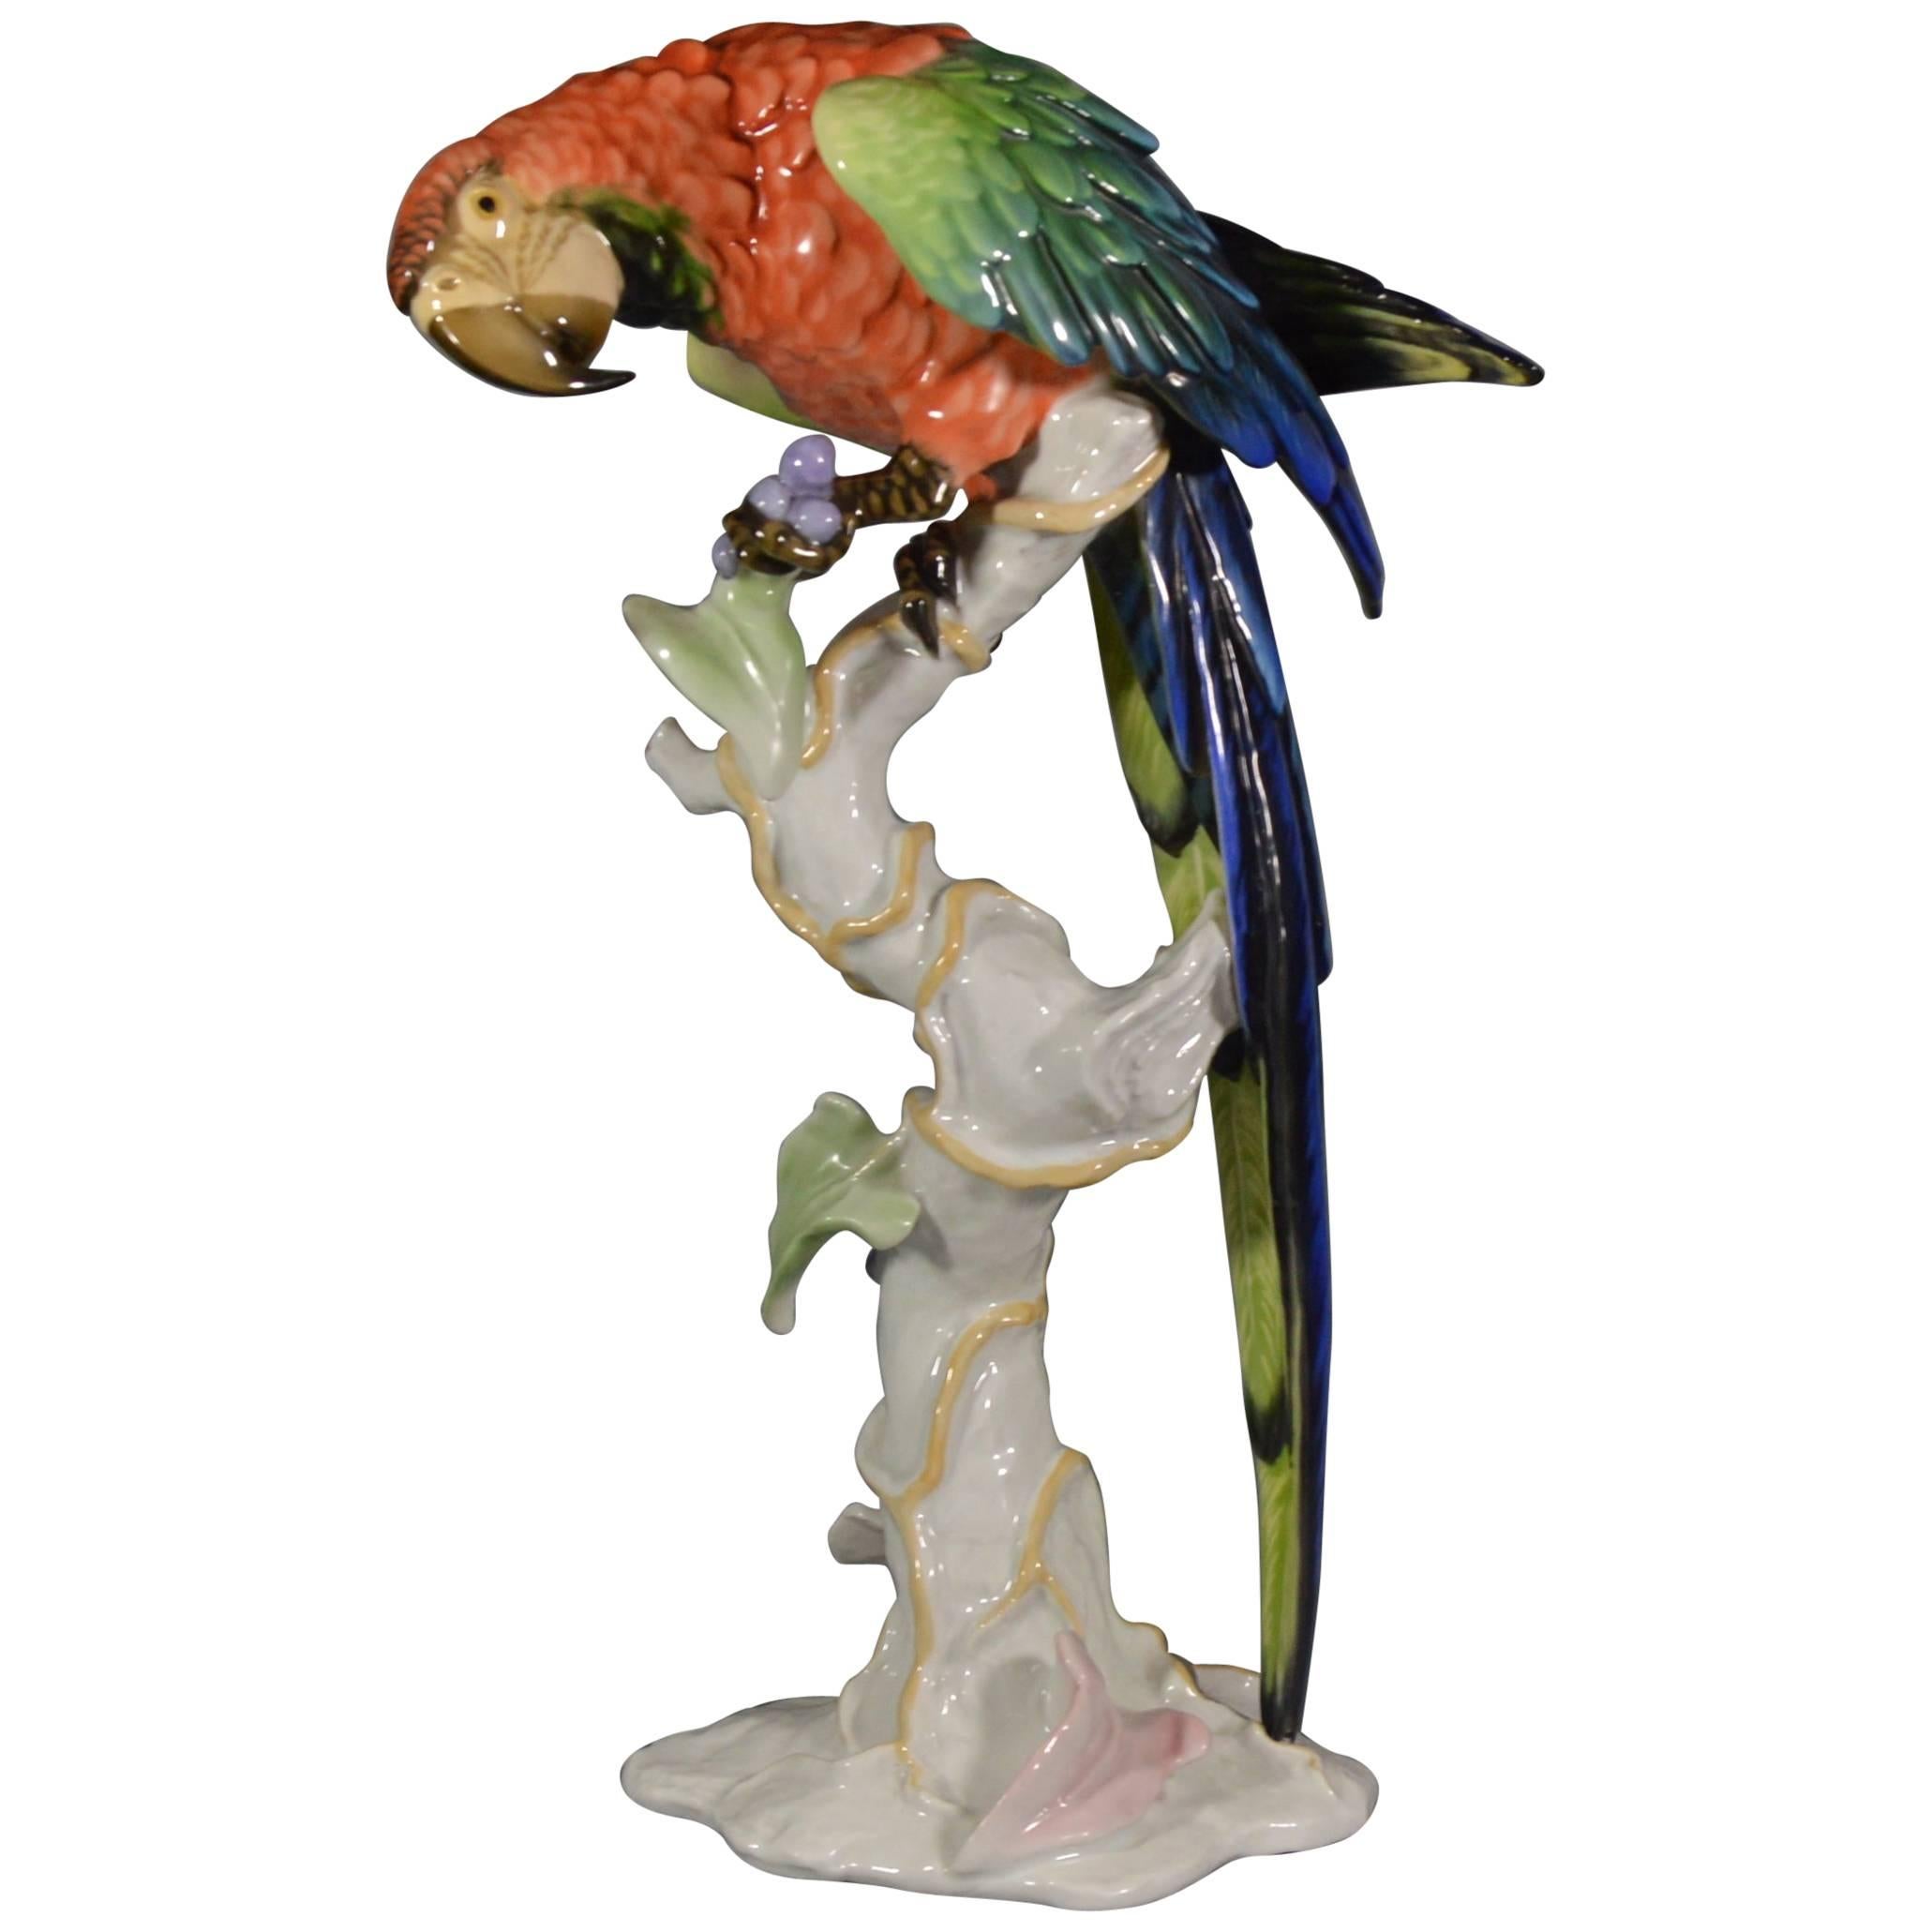 Large Ara Parrot Porcelain Figurine by Rosenthal Designed by F.Heidenreich, 1937